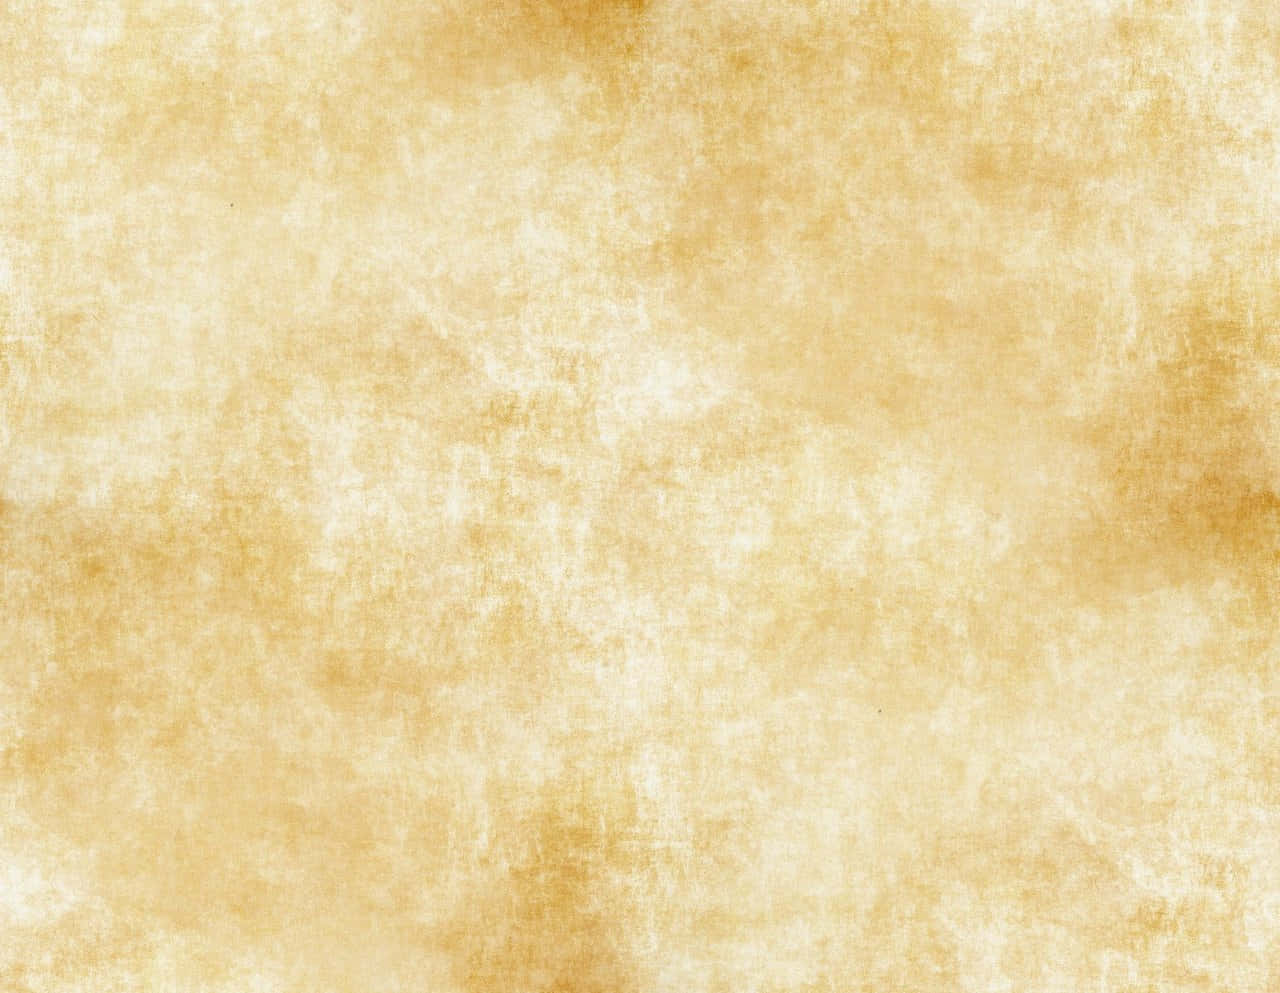 Parchment Paper Background White Gaps Background